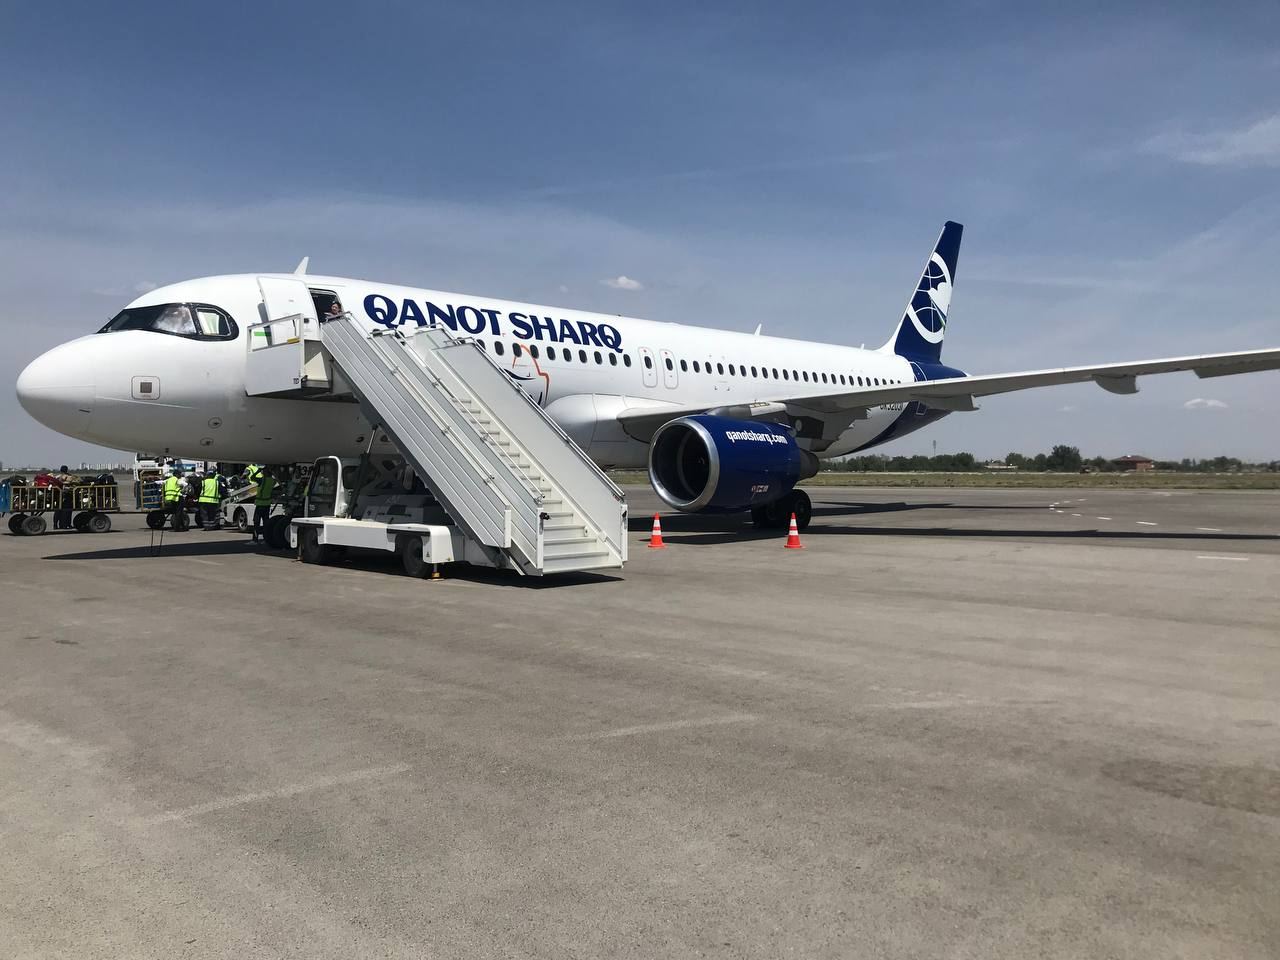 Авиакомпания Qanot Sharq запустила регулярные рейсы по маршруту Самарканд-Москва-Самарканд (ФОТО)